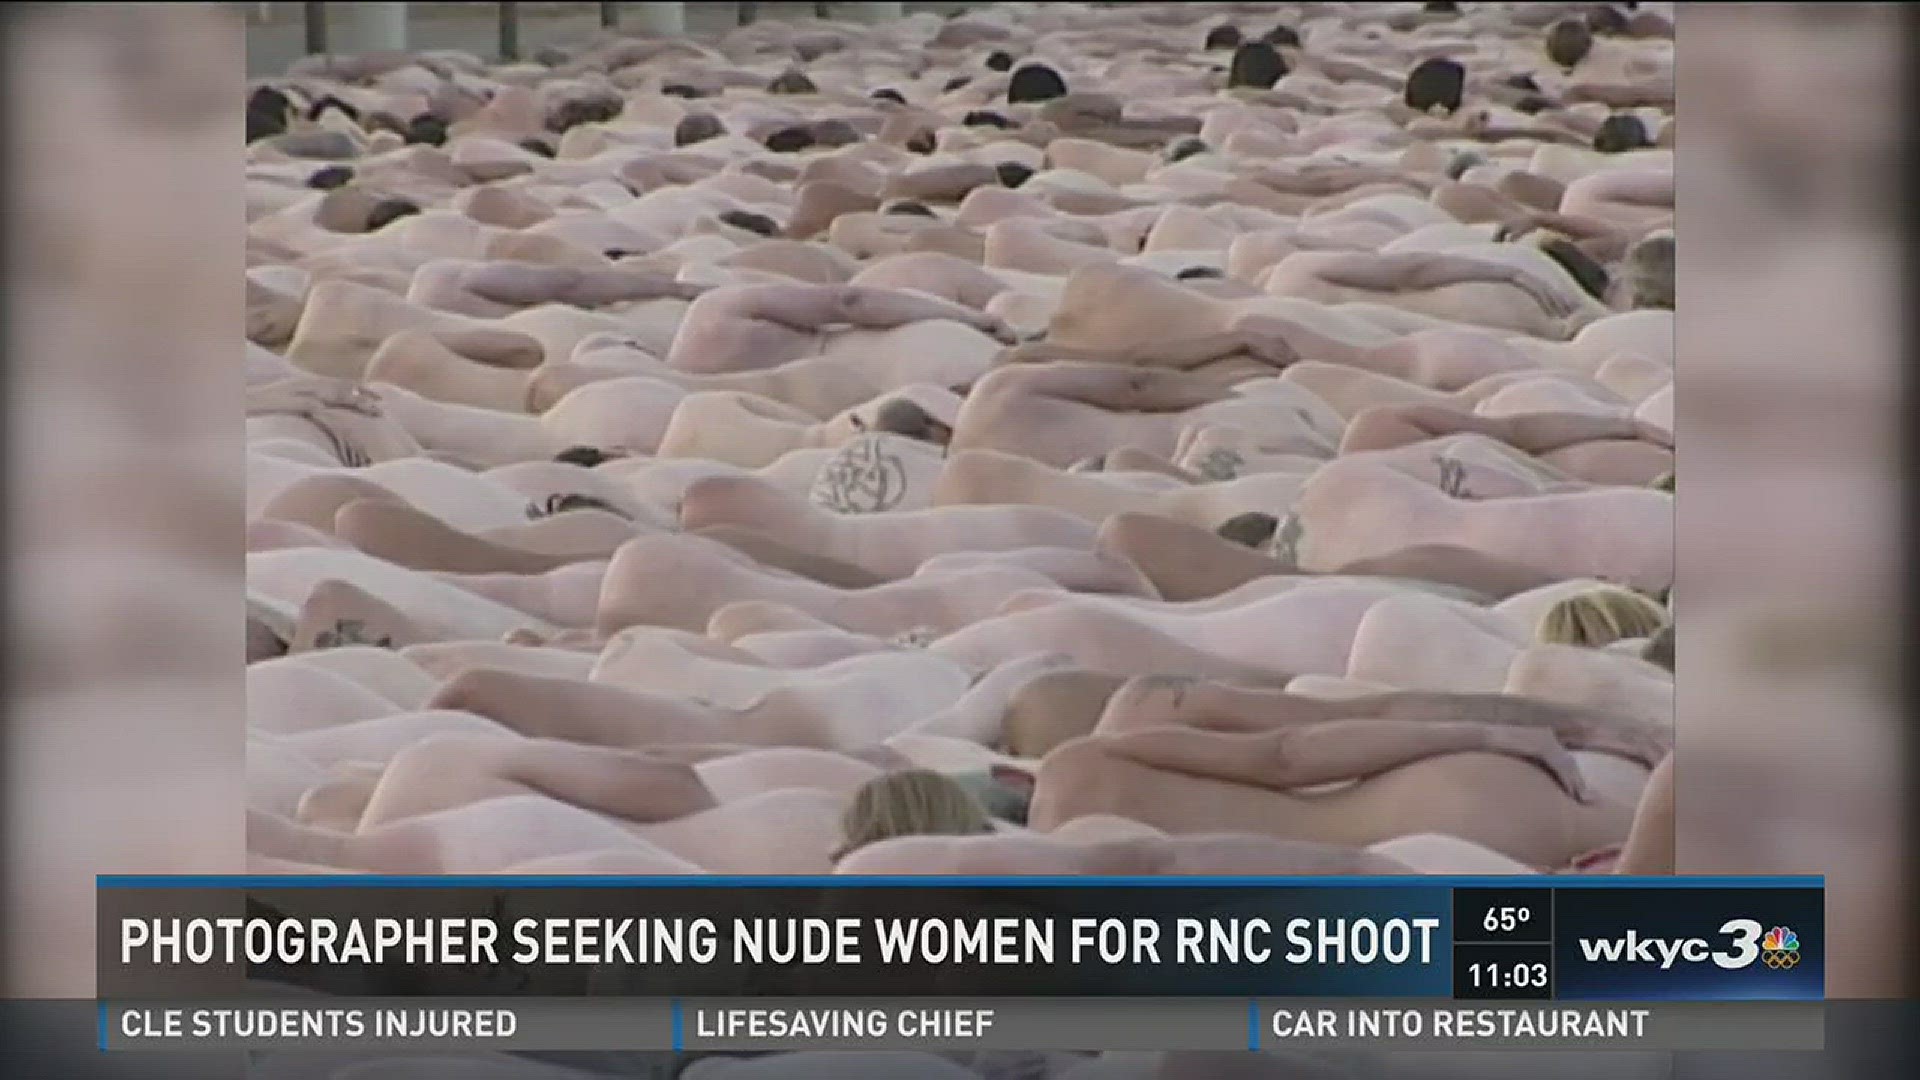 Nude women group